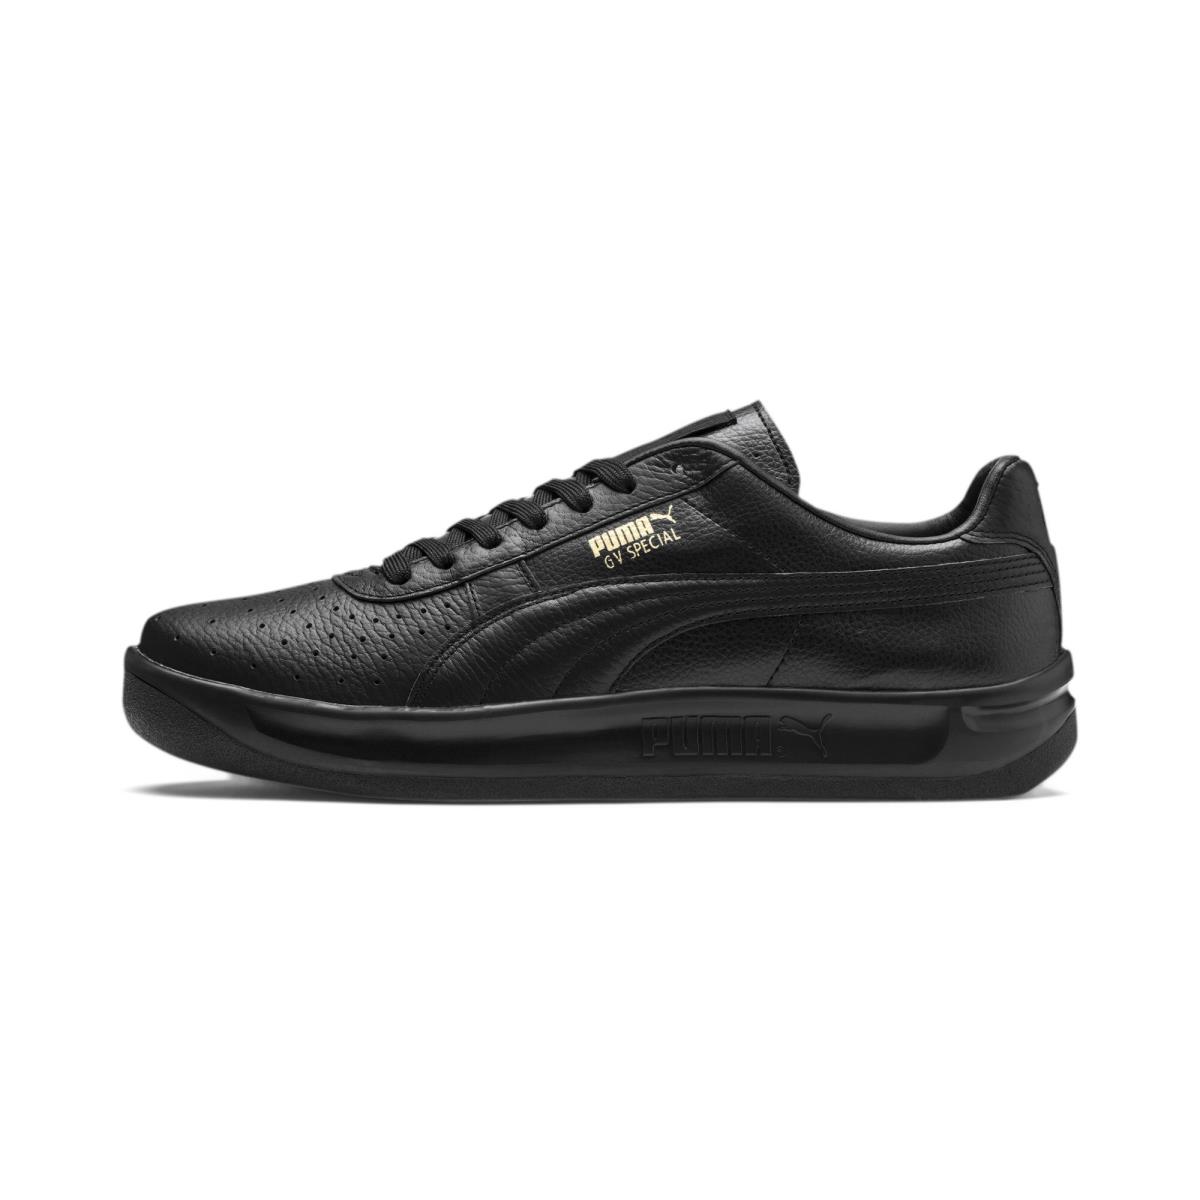 Puma Unisex GV Special+ Sneakers Black - Black/Black